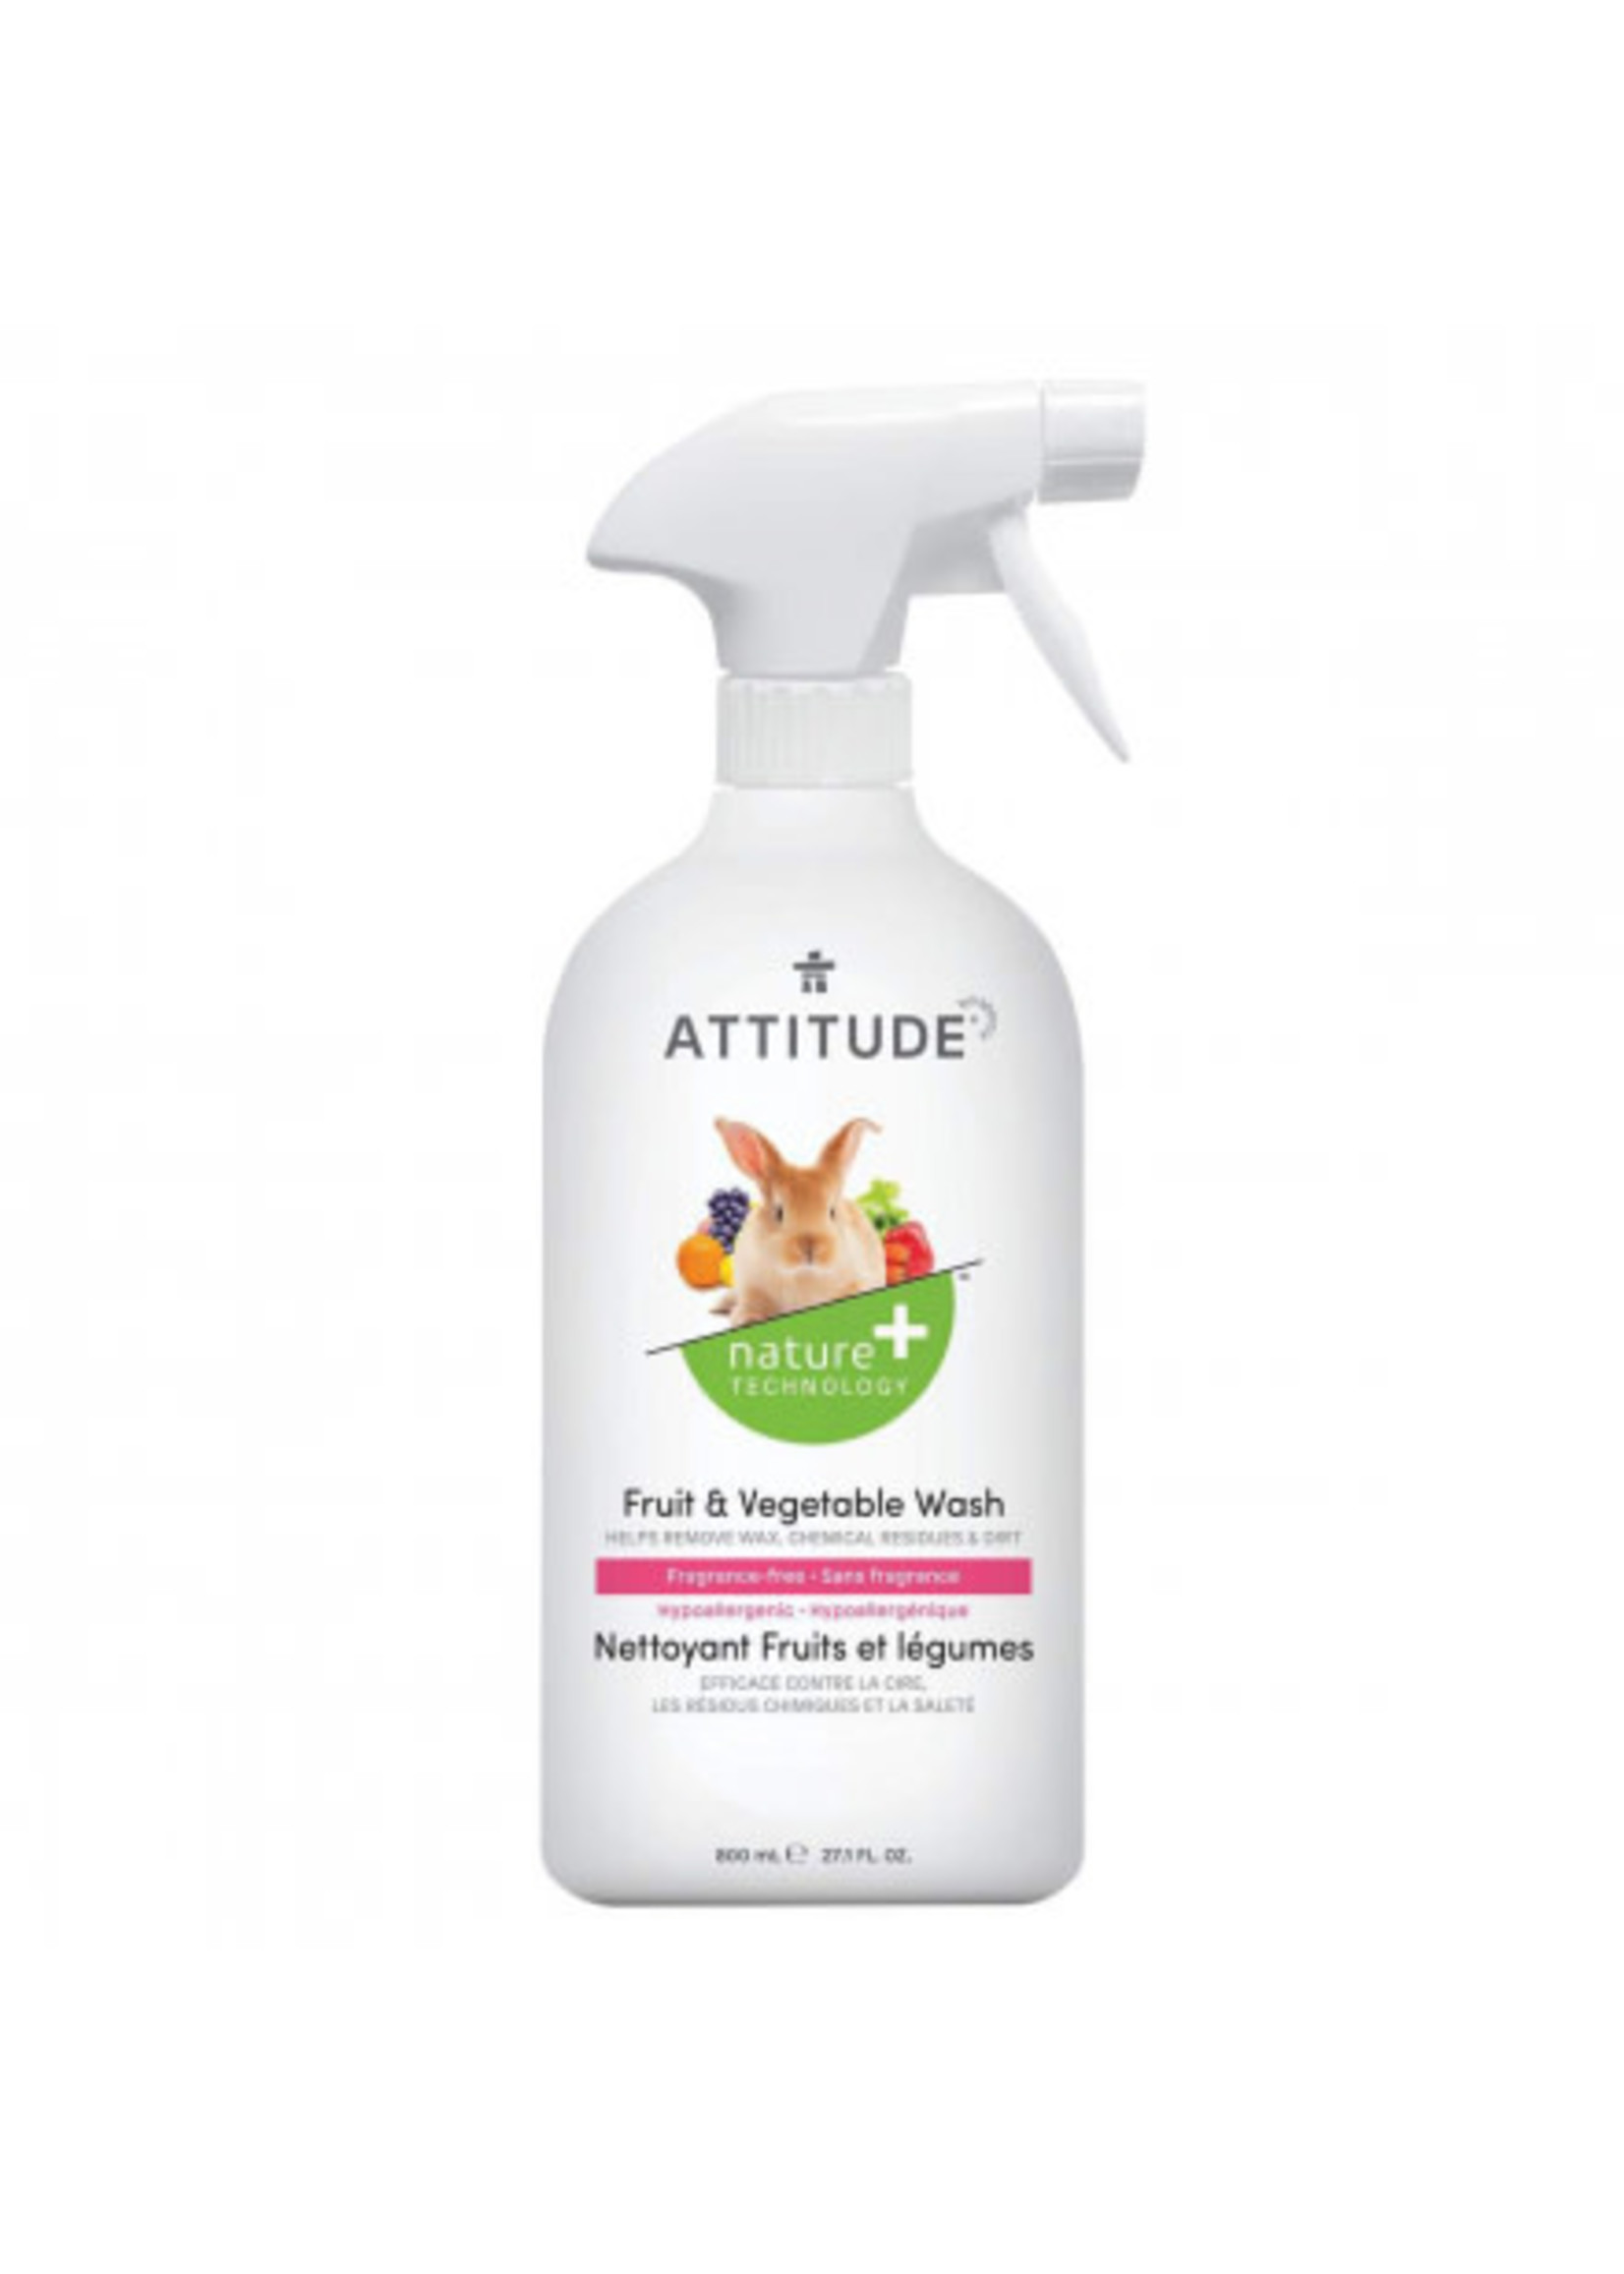 Attitude Attitude Nature+ - Fruit & Vegetable Wash 800ml